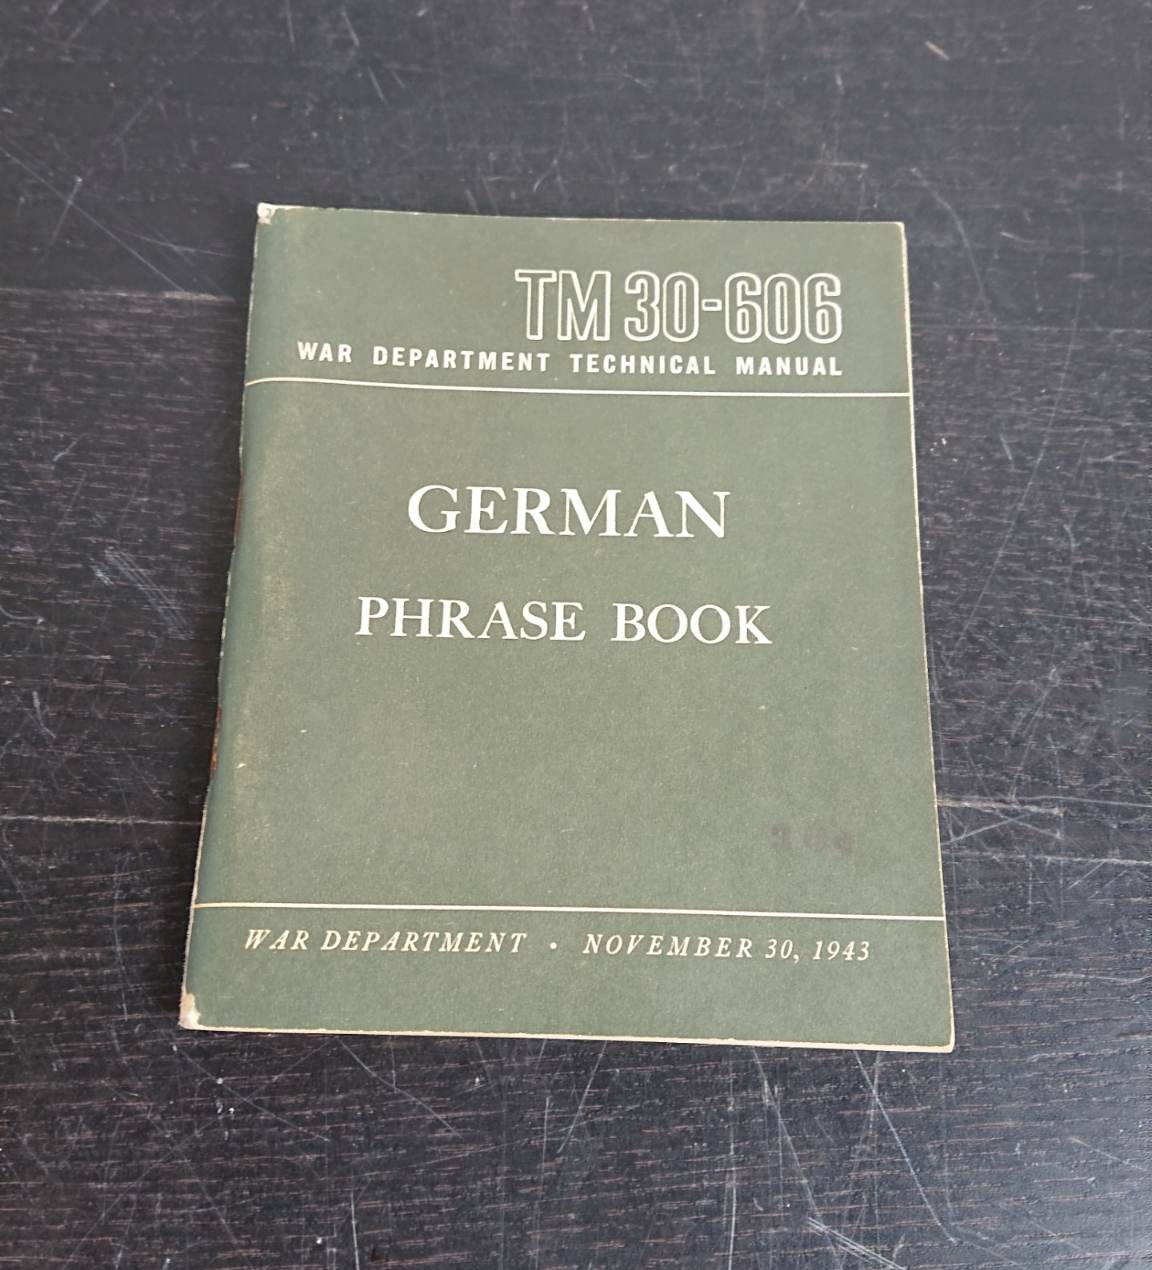 militaria : Livret US langage allemand / German phrase book